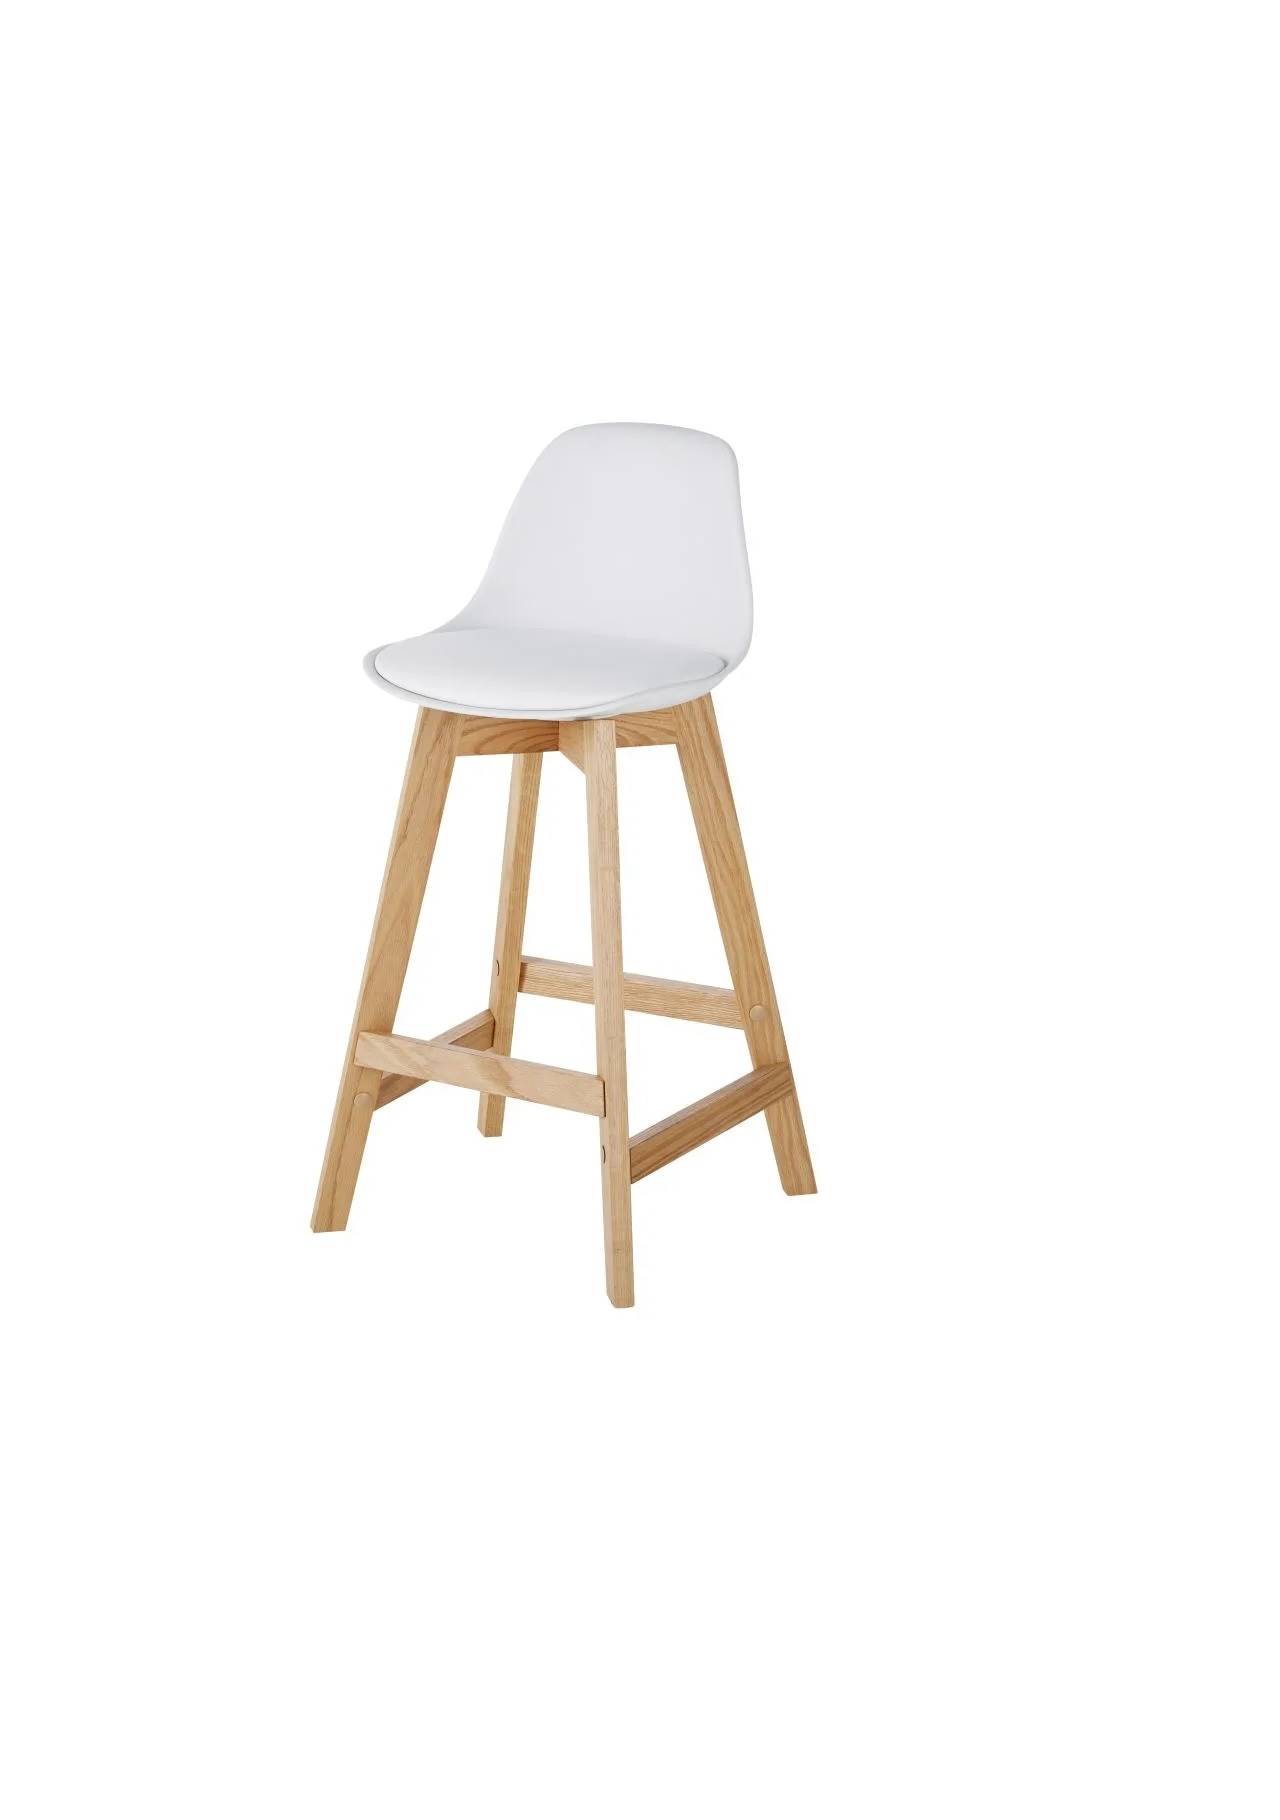 mobiliario para cocinas pequeñas silla de estilo escandinavo Maisons du Monde, 79,99€